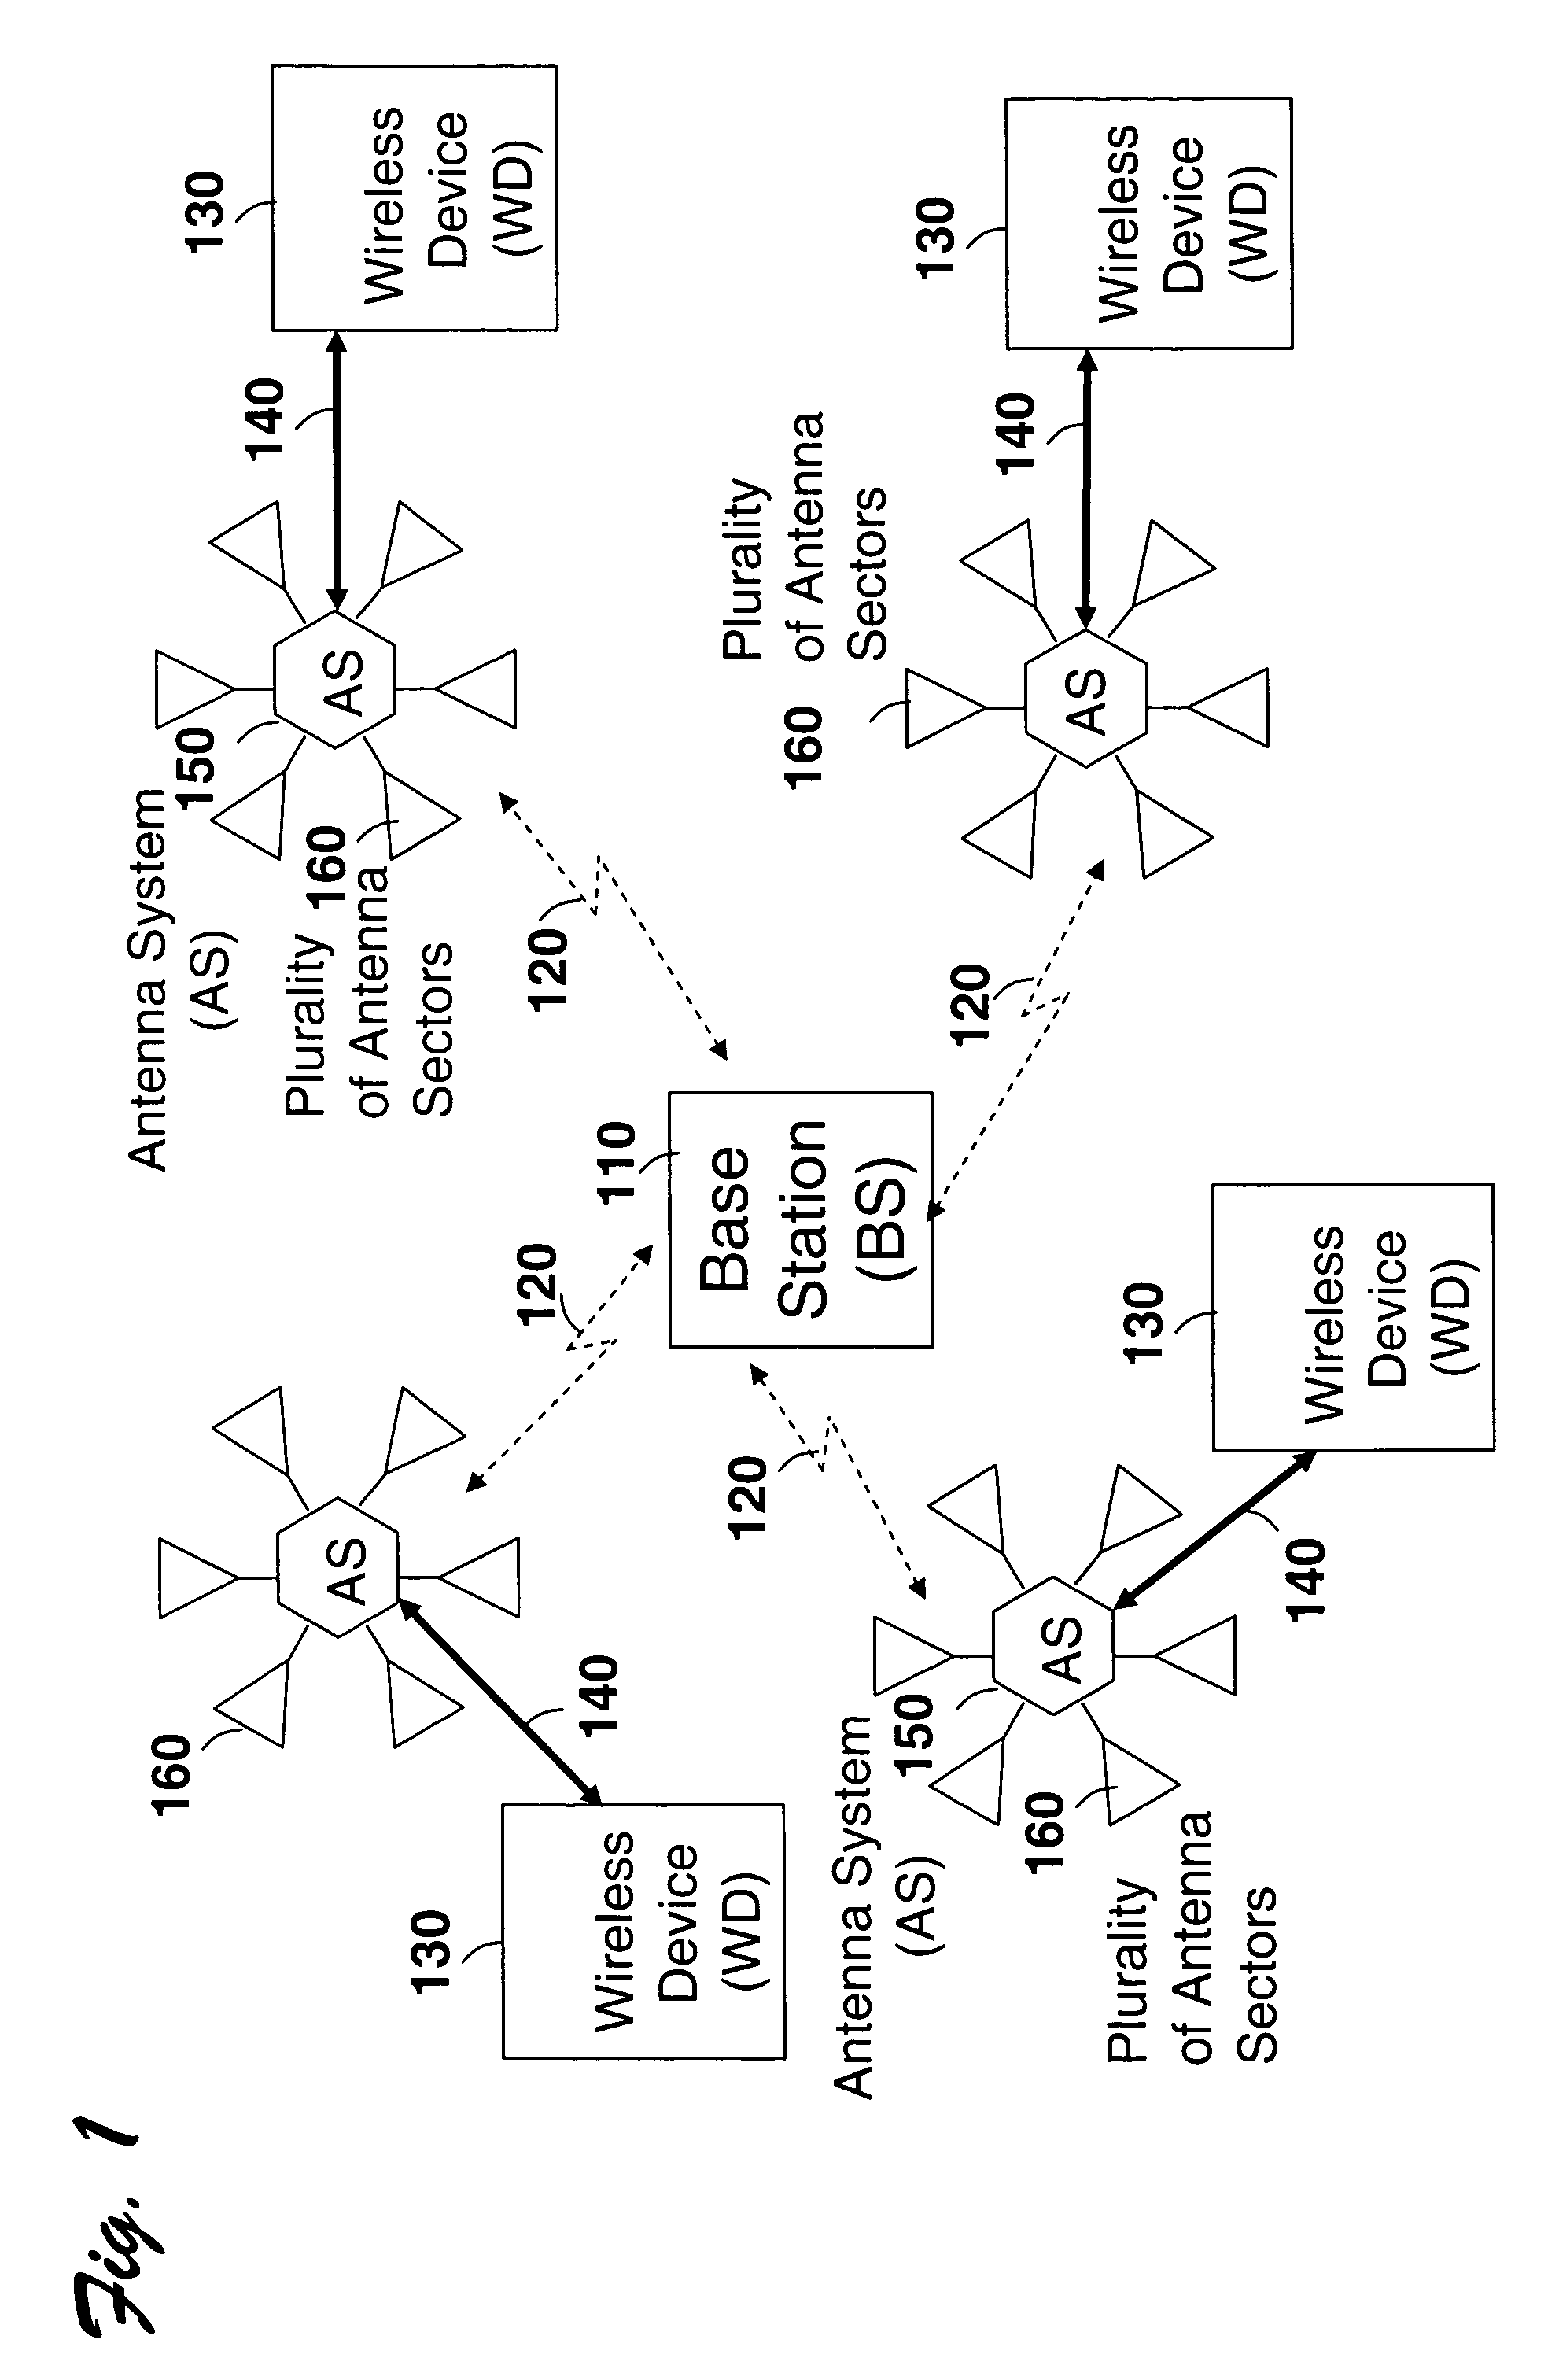 Multi-sector antenna apparatus